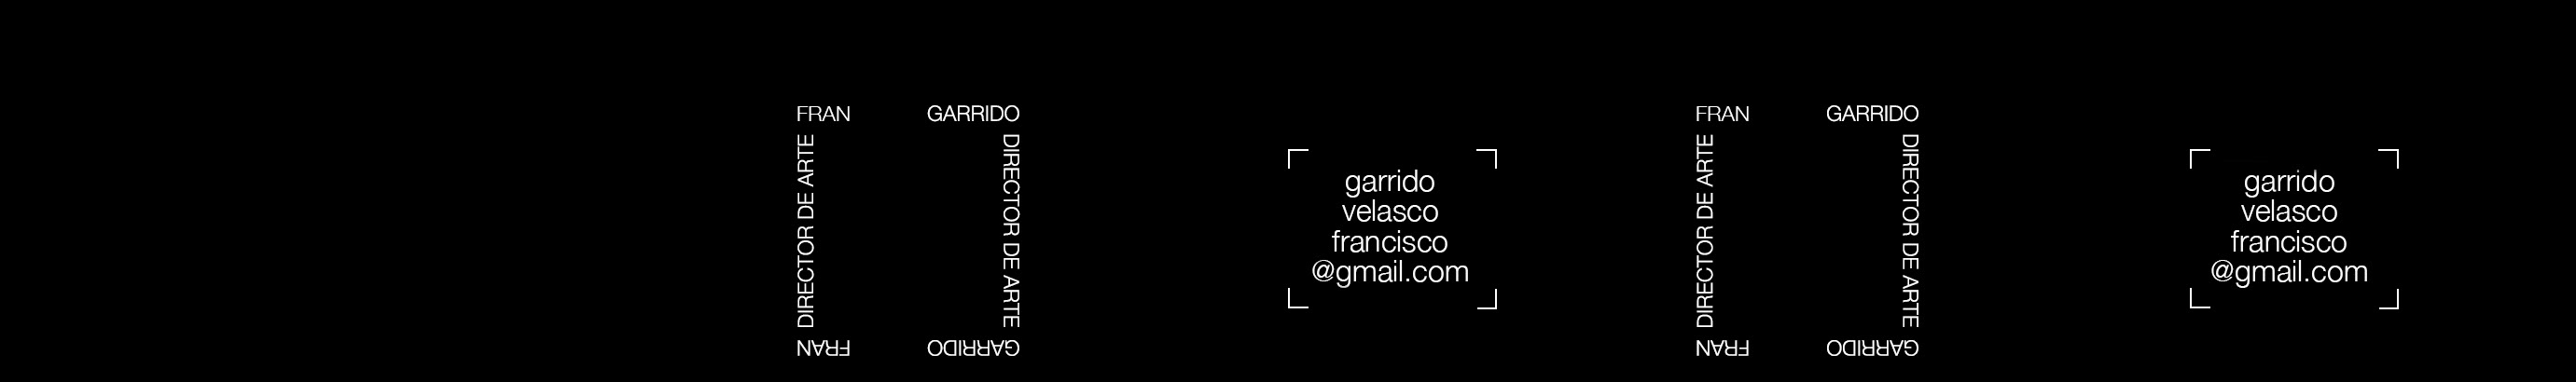 Fran Garrido's profile banner